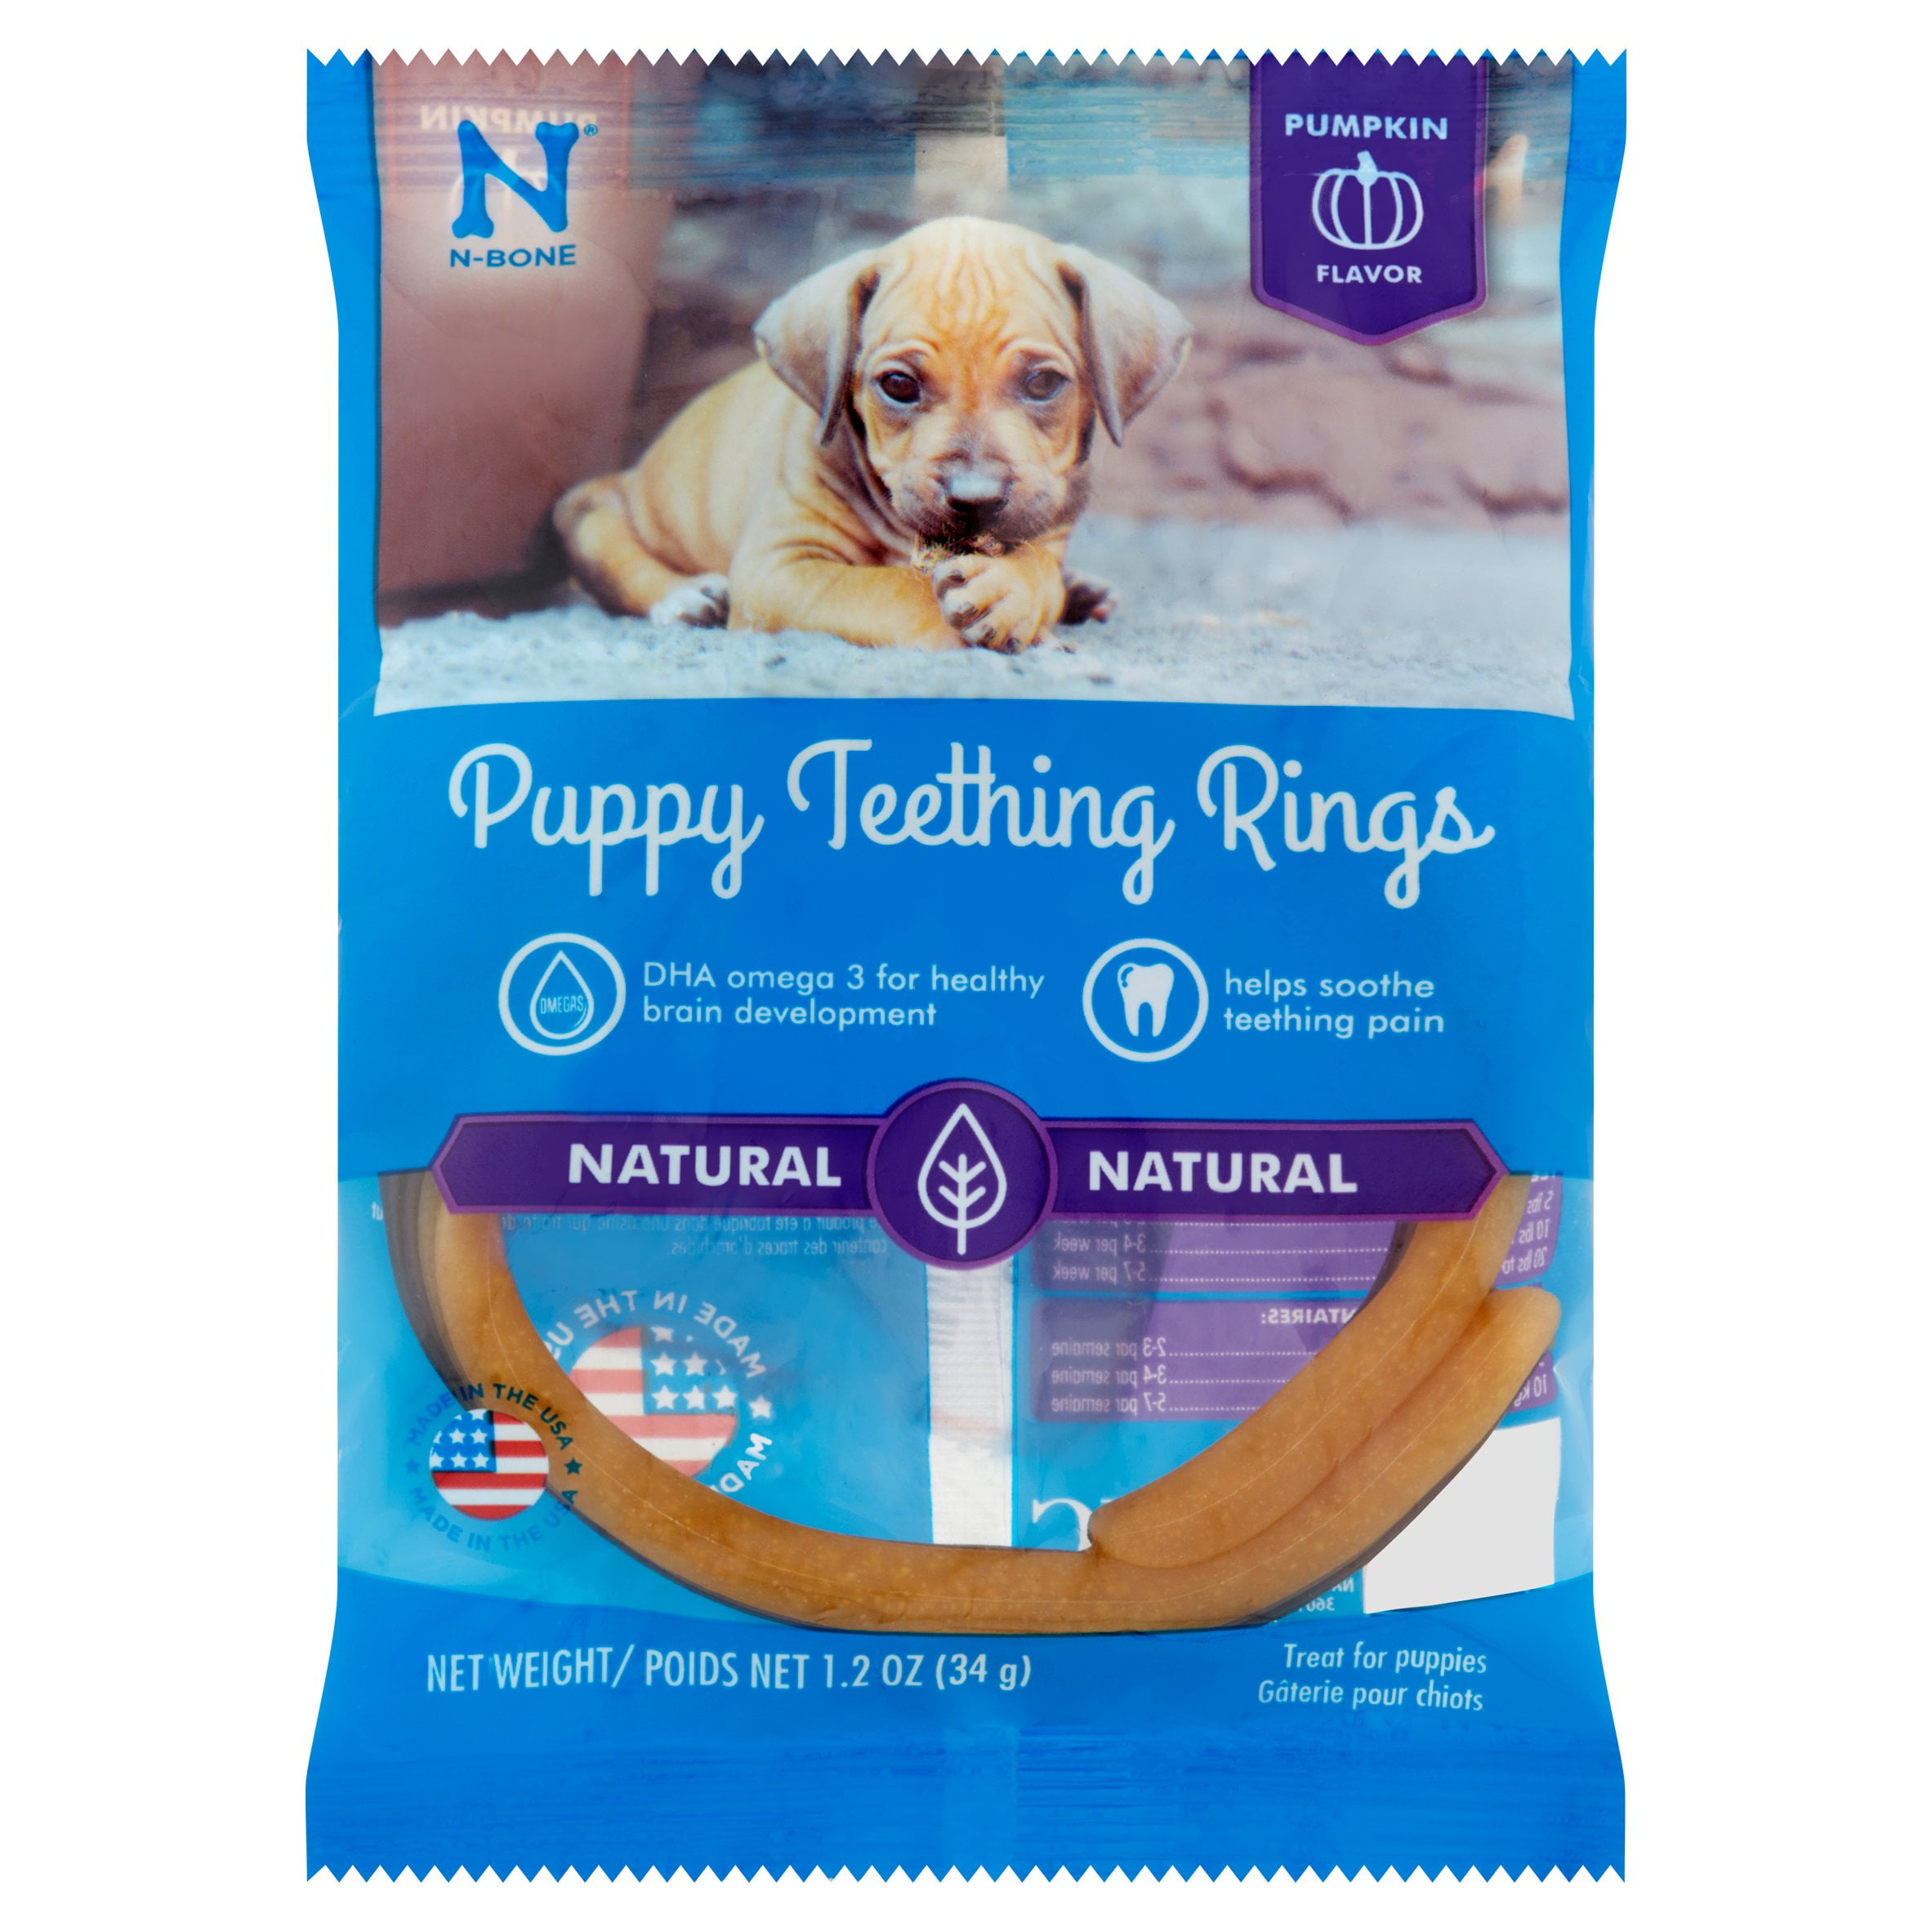 NBone Pumpkin Flavor Puppy Teething Rings Treat for Puppies, 1.2 oz